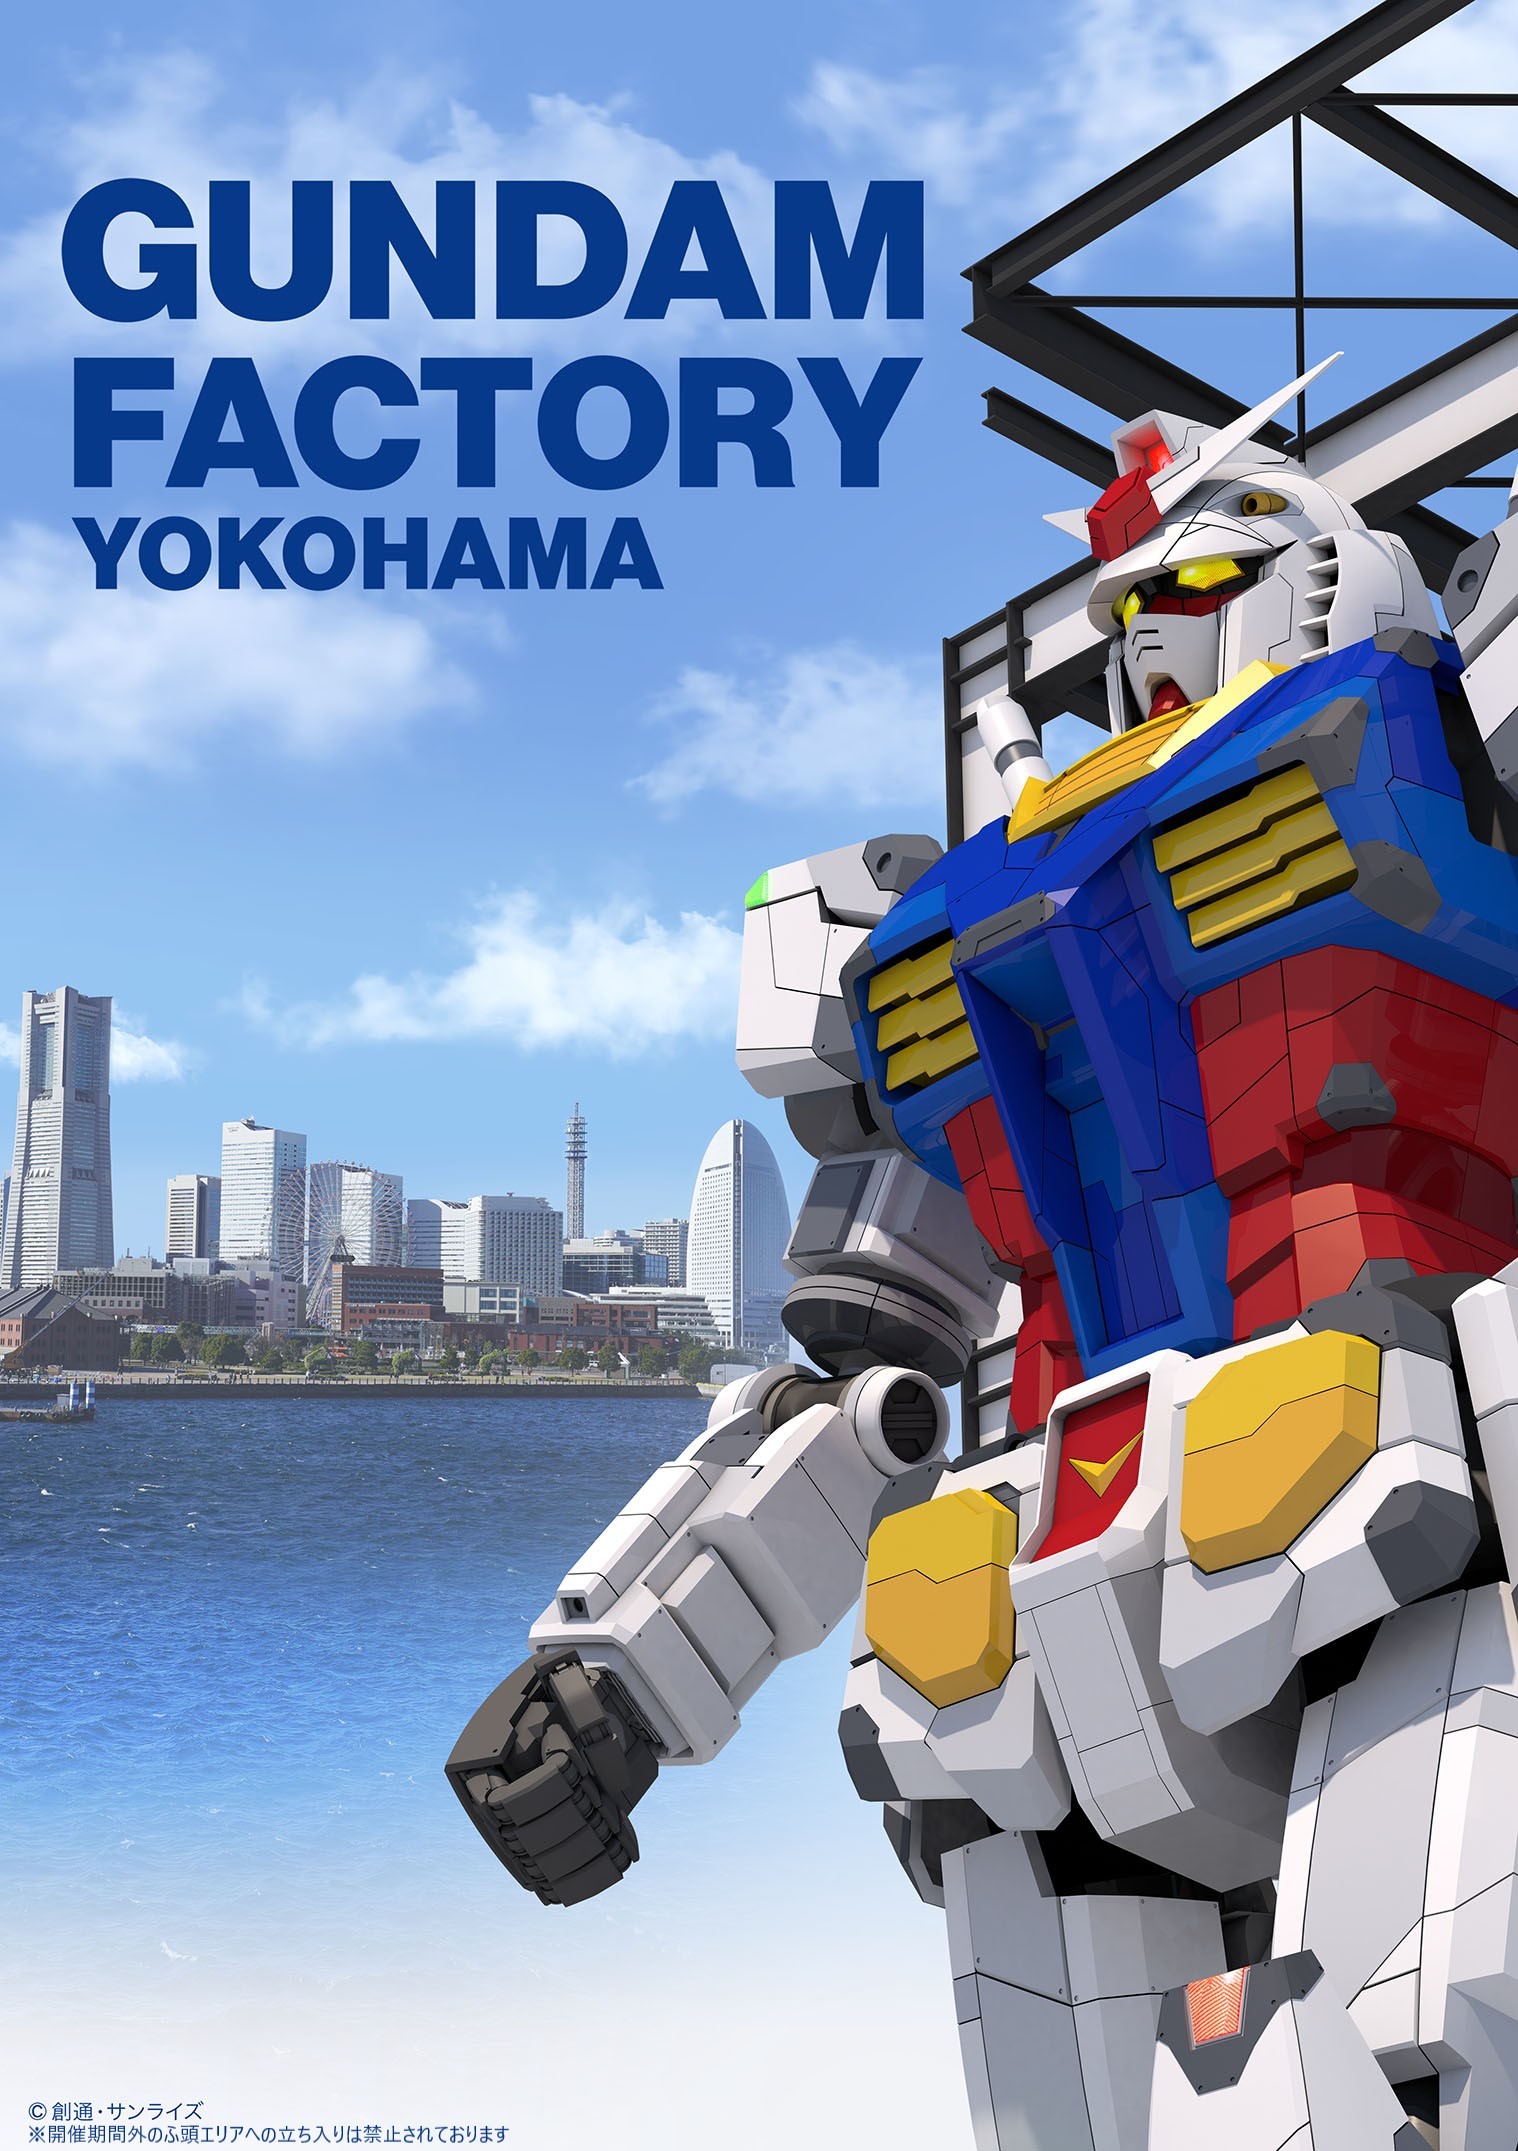 18mの実物大ガンダムを動かす 機動戦士ガンダム 40 周年プロジェクト Gundam Factory Yokohama 本オープン延期 Spice エンタメ特化型情報メディア スパイス